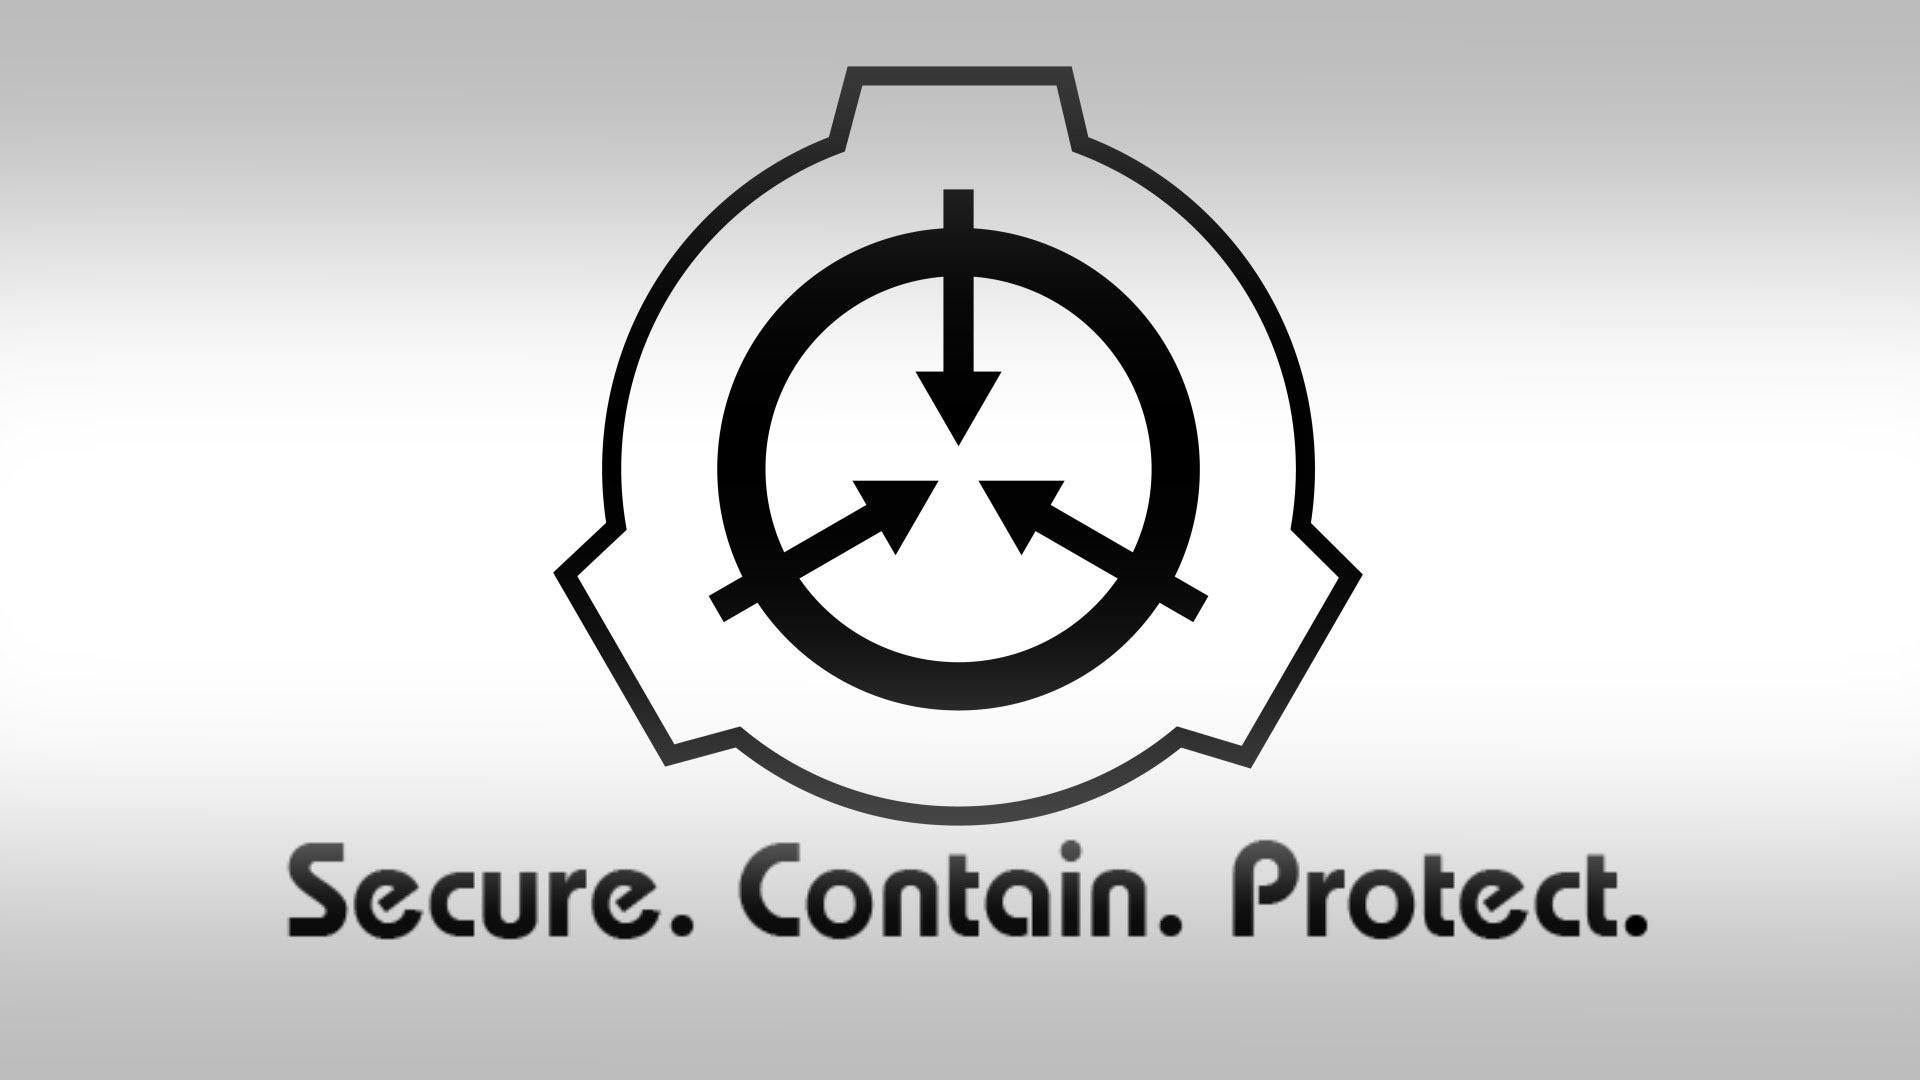 СЦП логотип secure protect contain